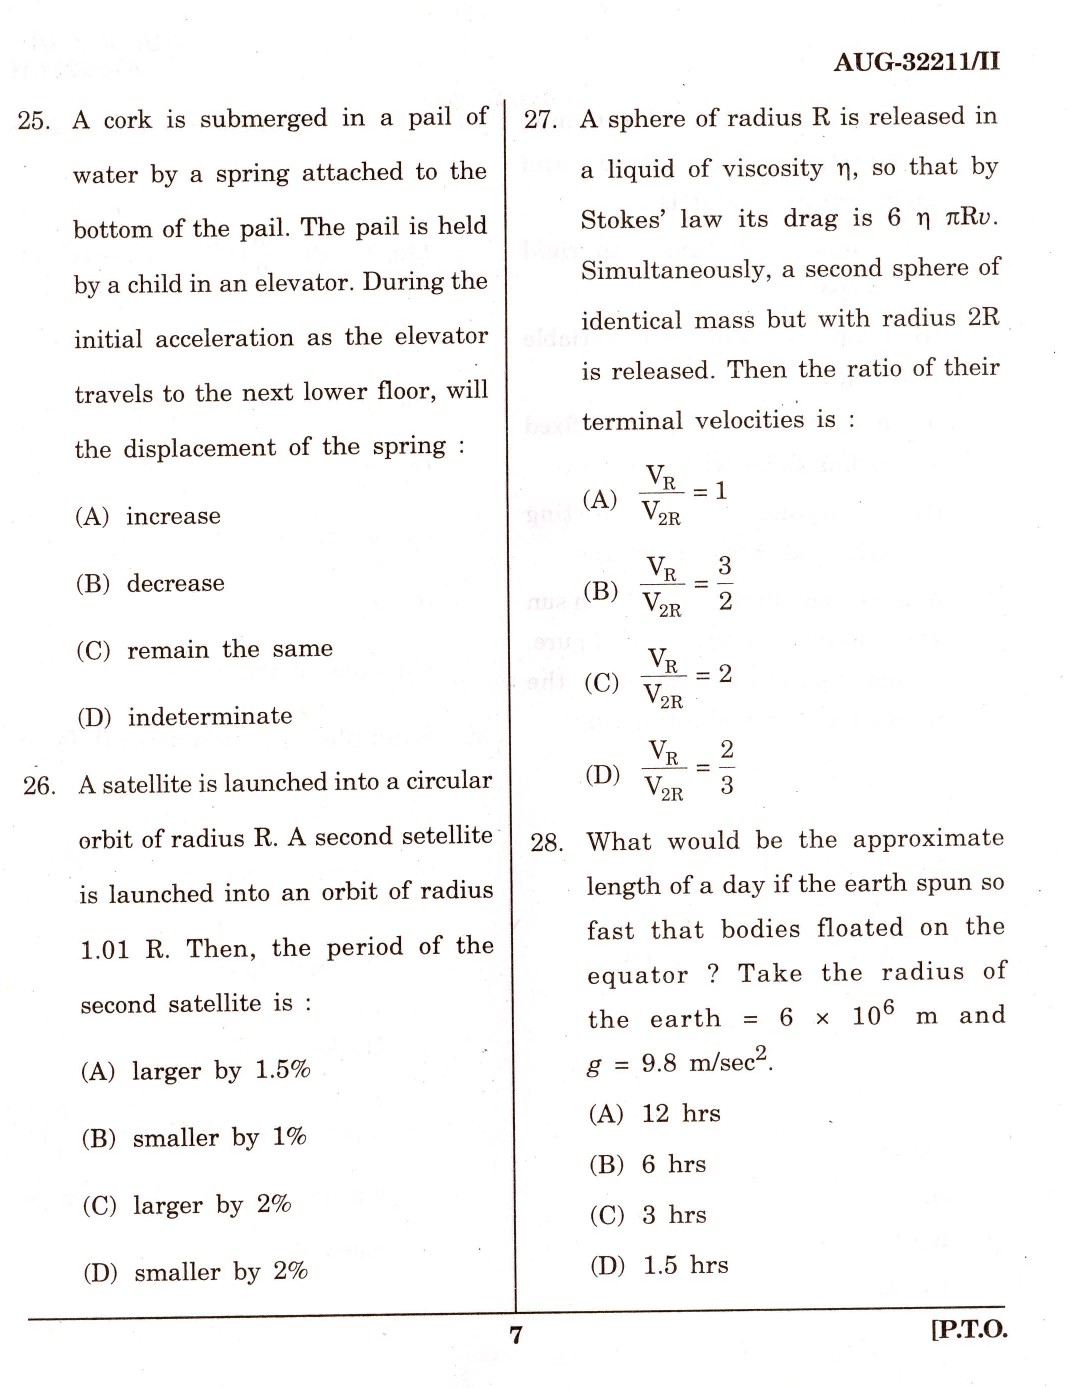 Maharashtra SET Physics Question Paper II August 2011 7